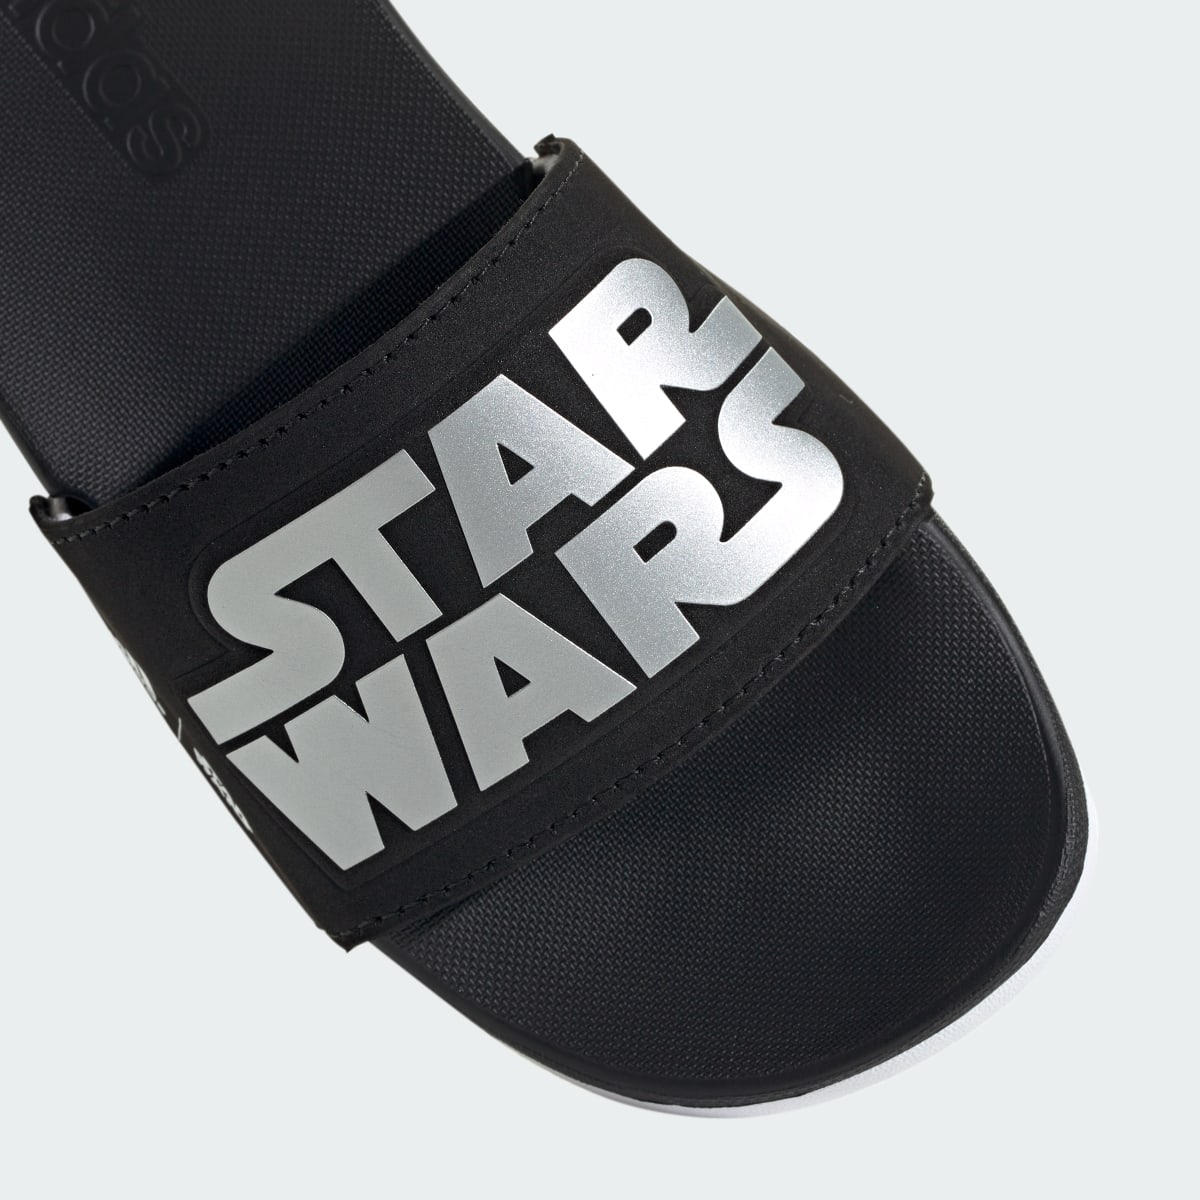 Adidas Chinelos Adilette Comfort Star Wars – Criança. 9